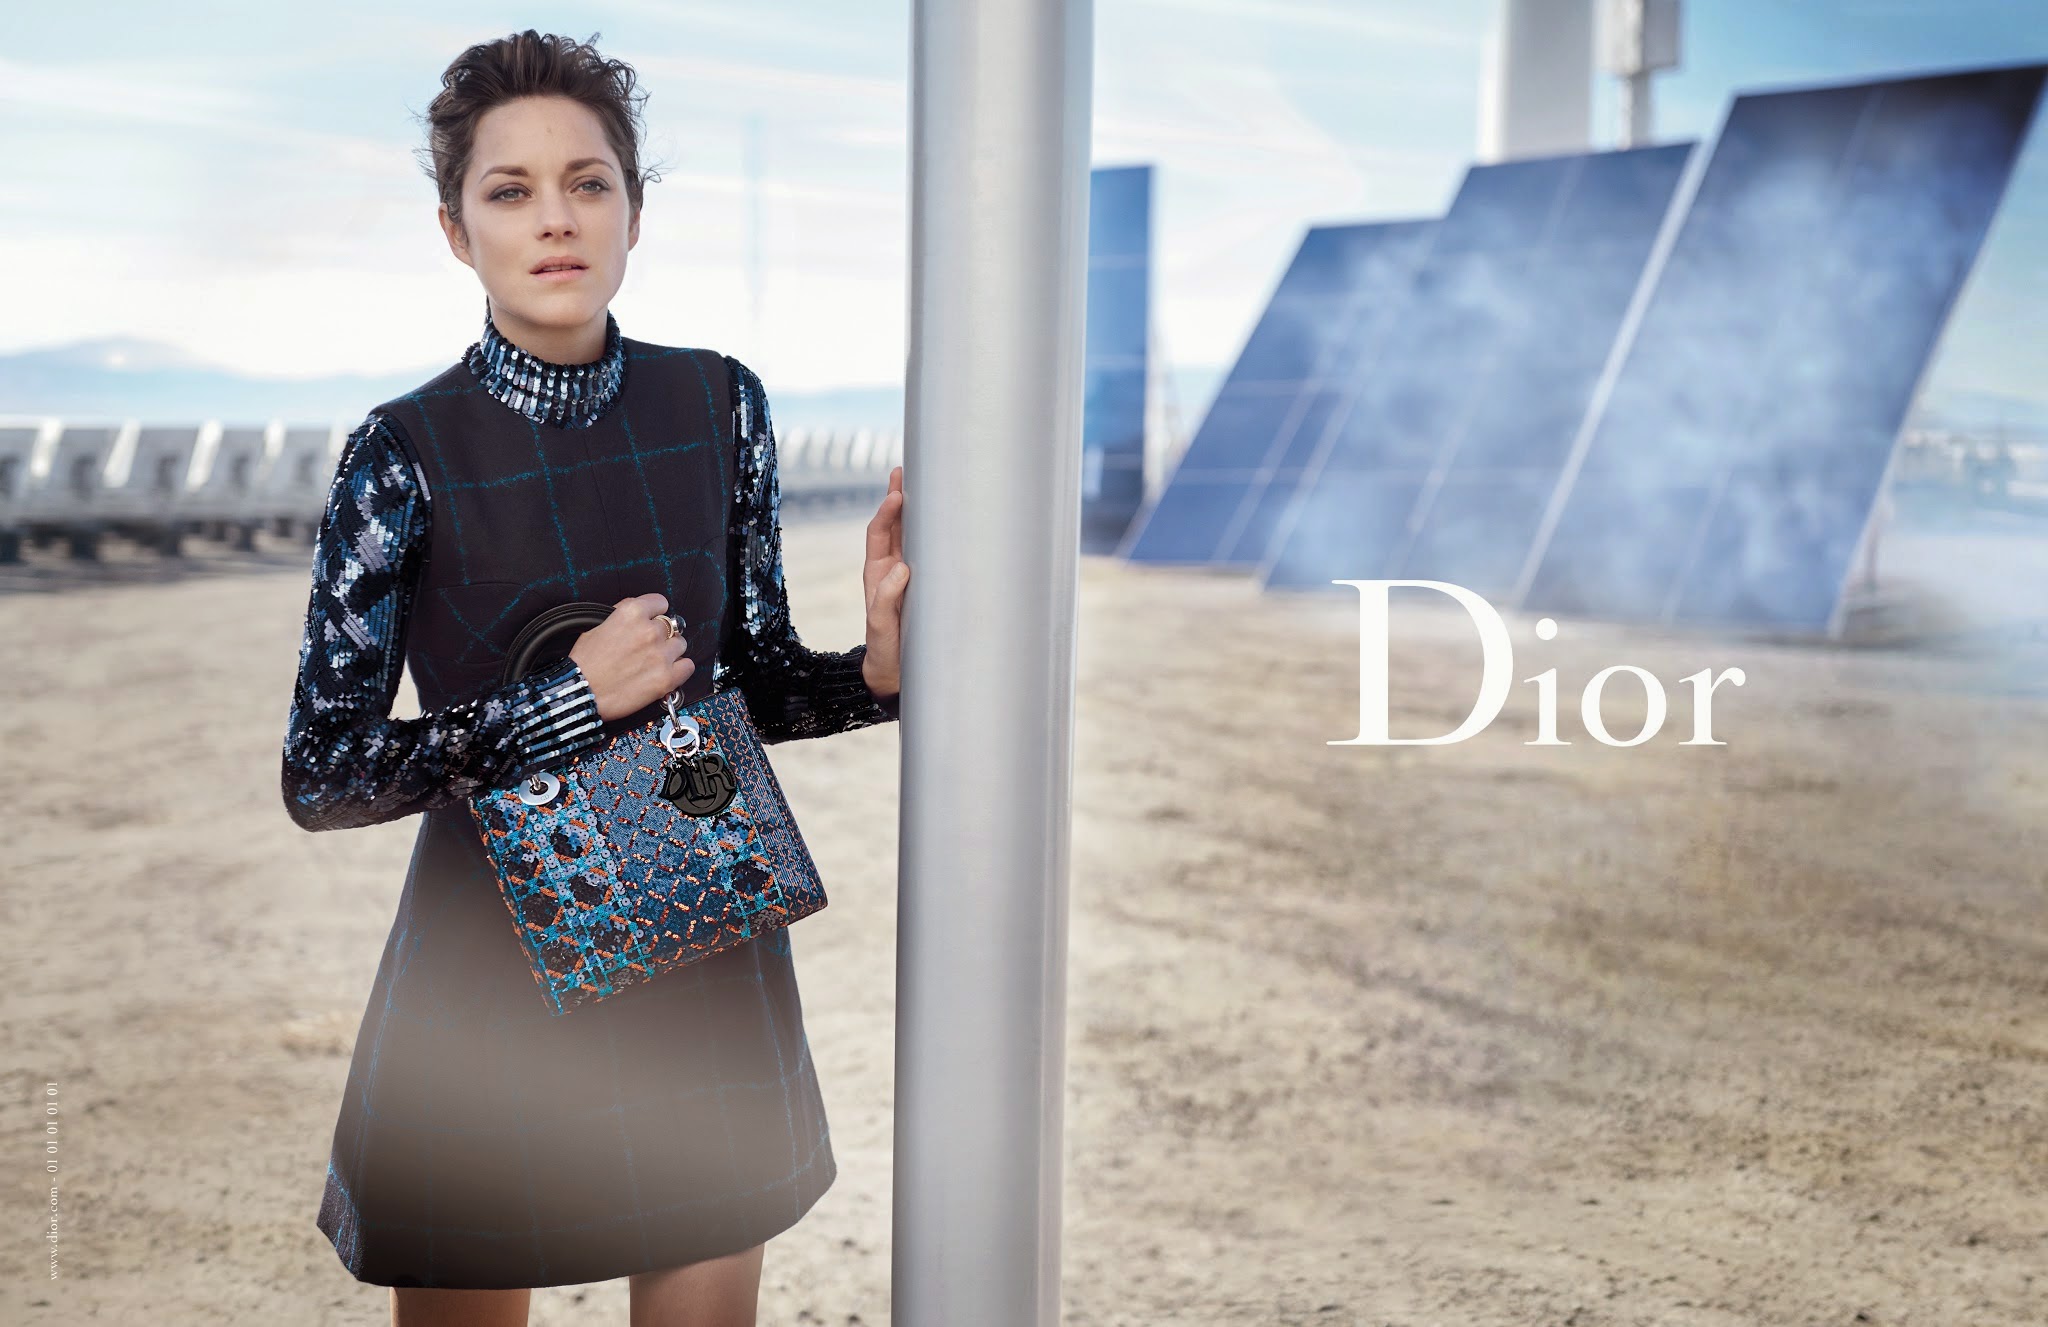 Marion Cotillard's Latest Lady Dior Ad Campaign